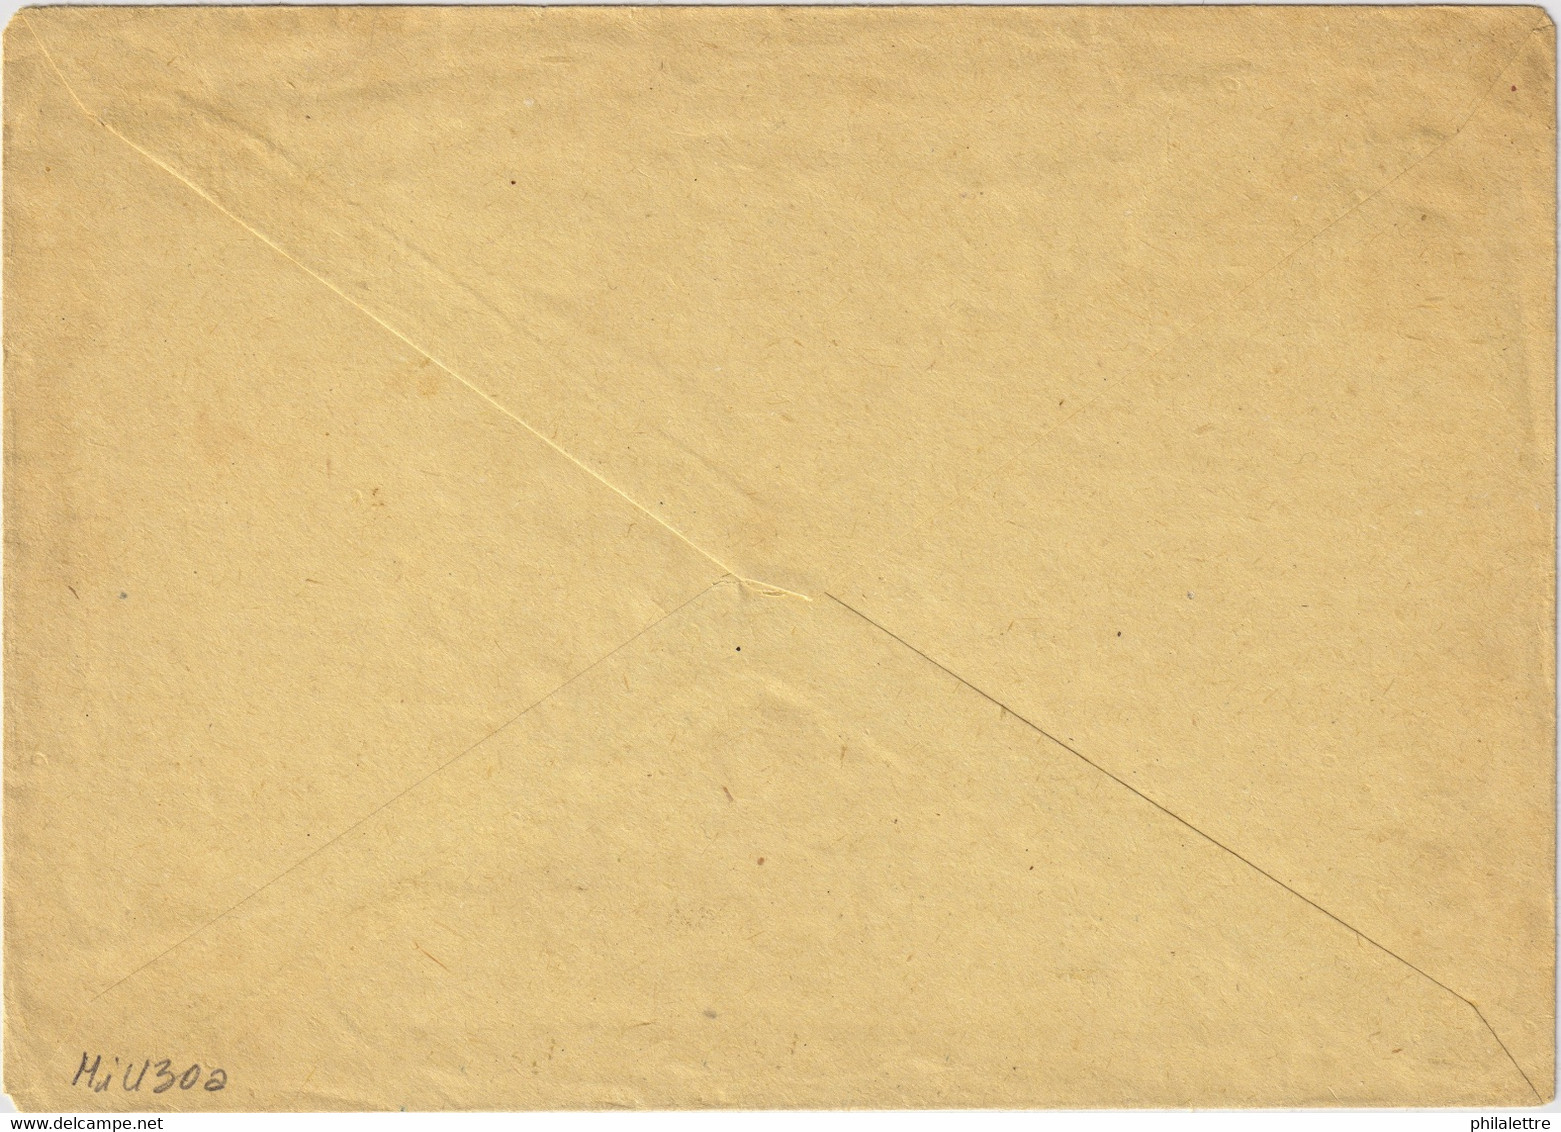 HUNGARY - 1956 60f Combined Harvester Type Postal Envelope Mi.U30a - Enteros Postales